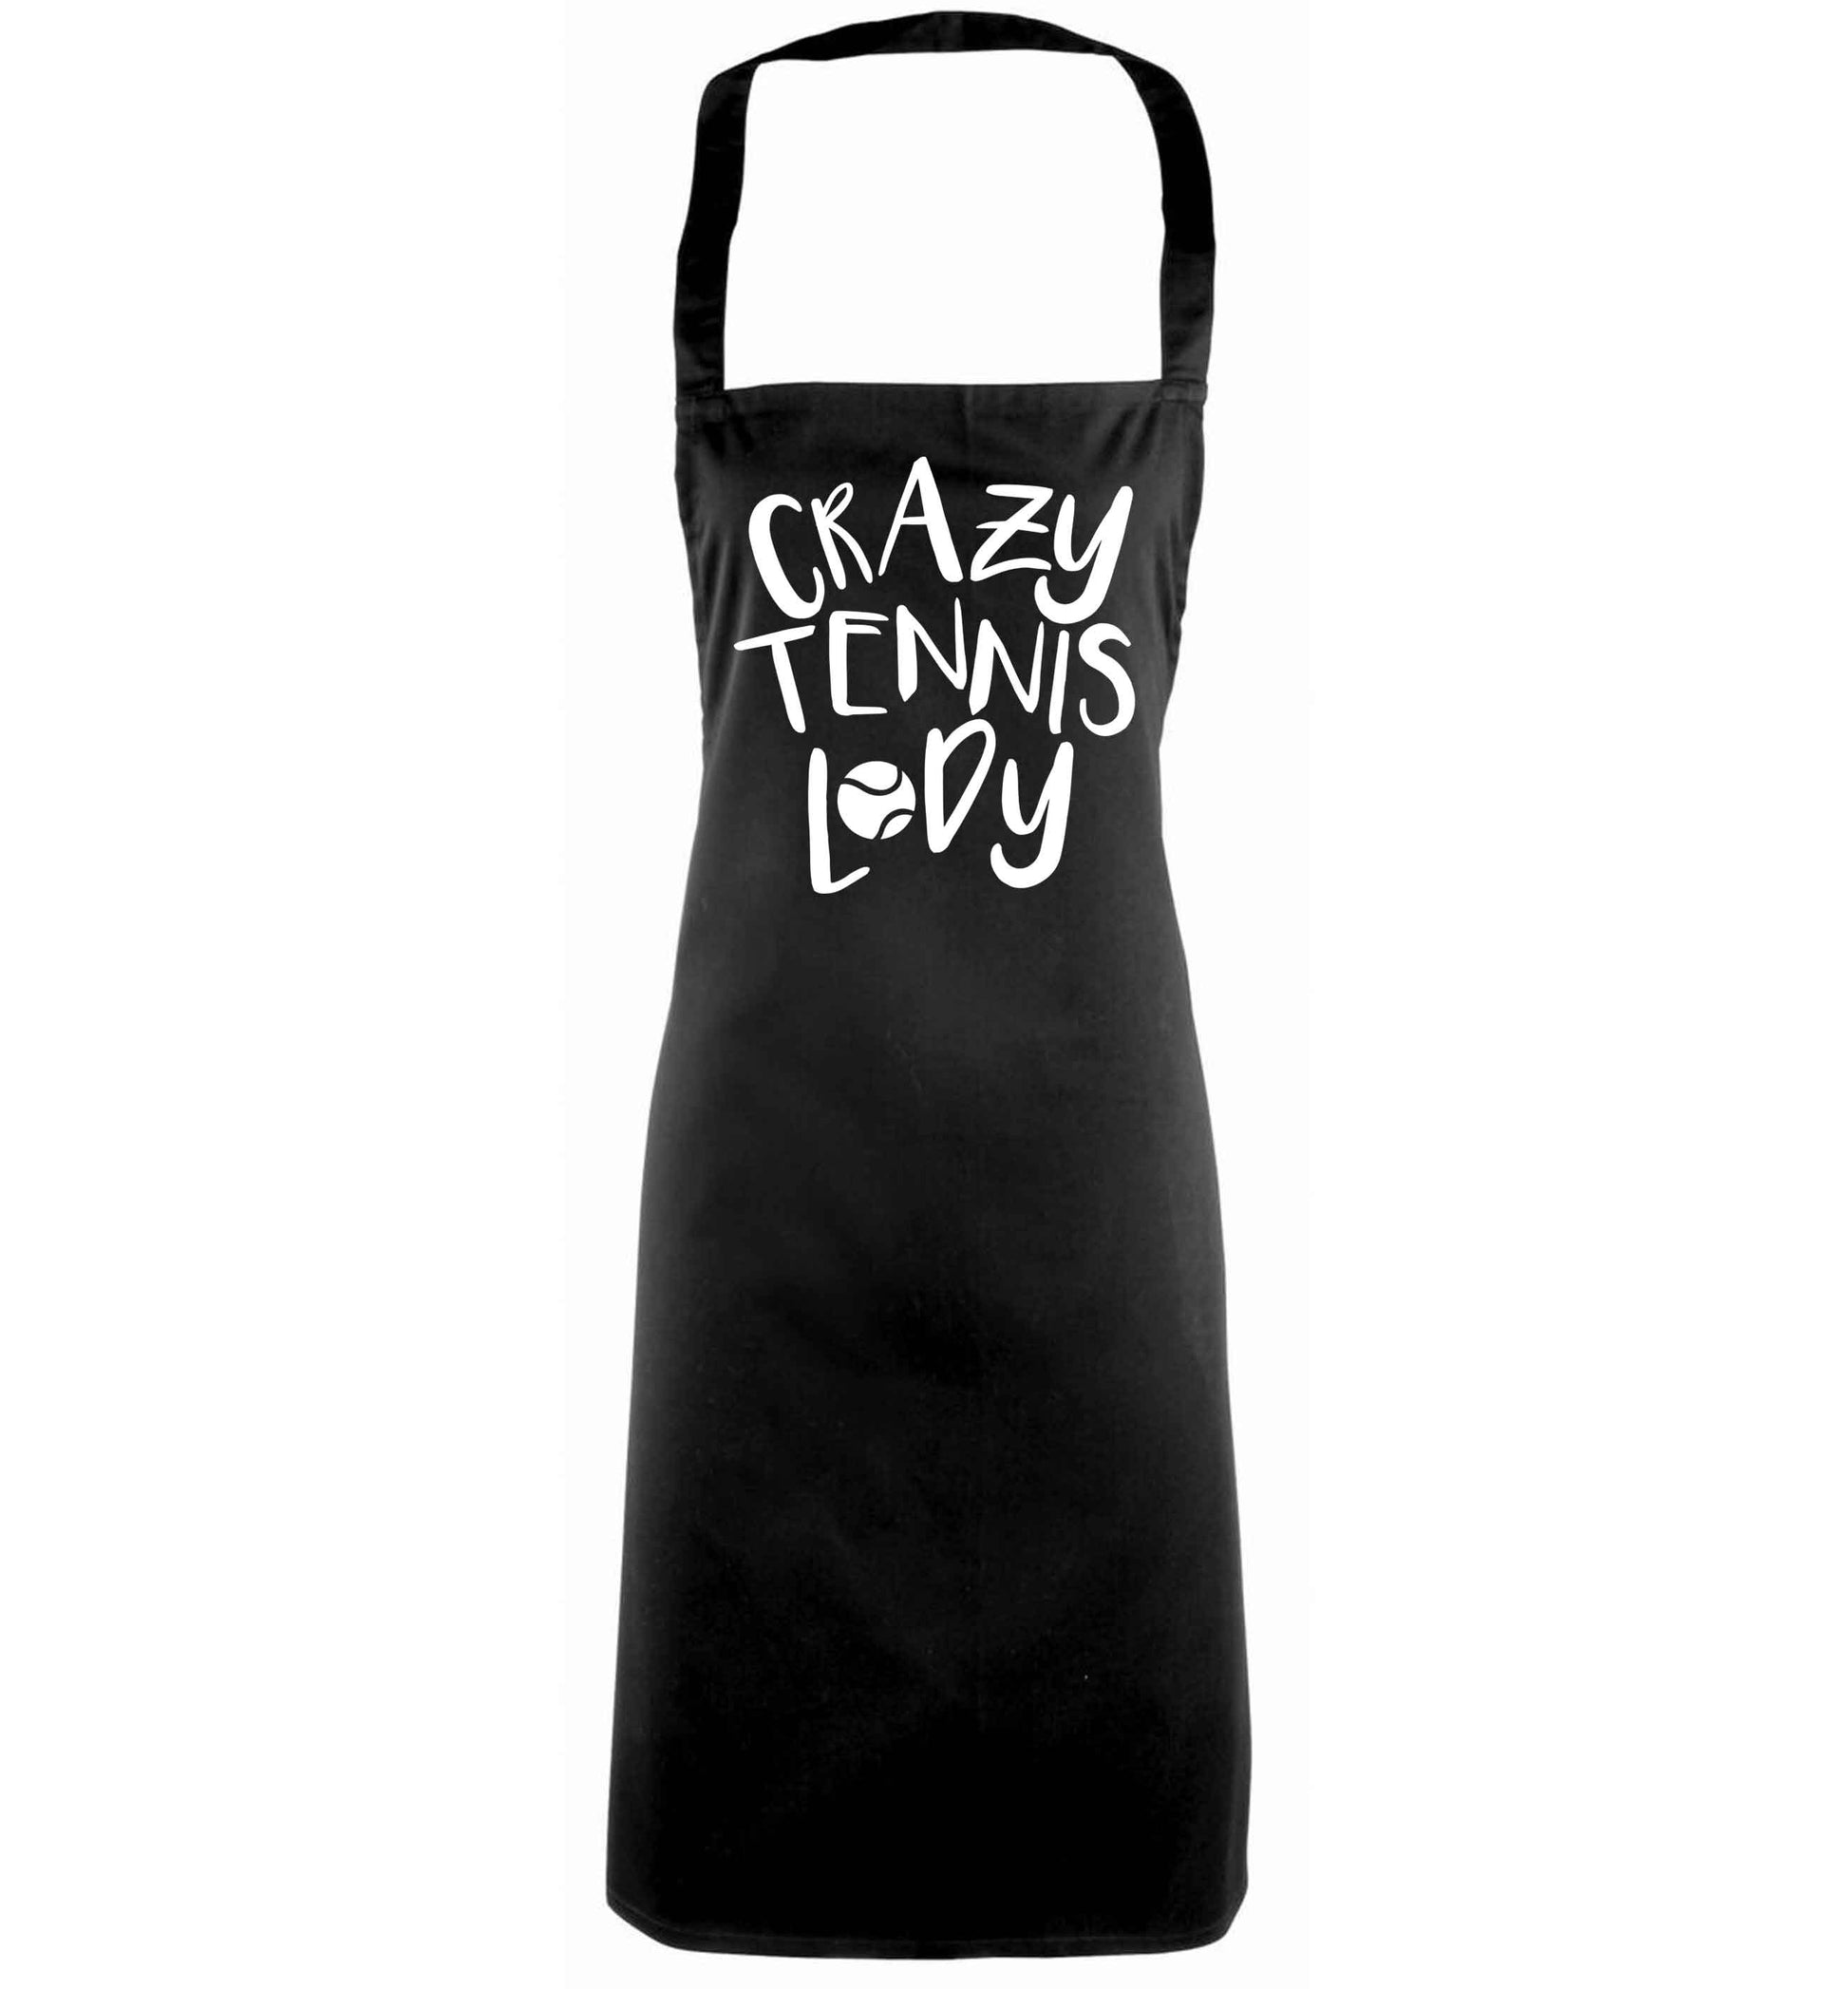 Crazy tennis lady black apron